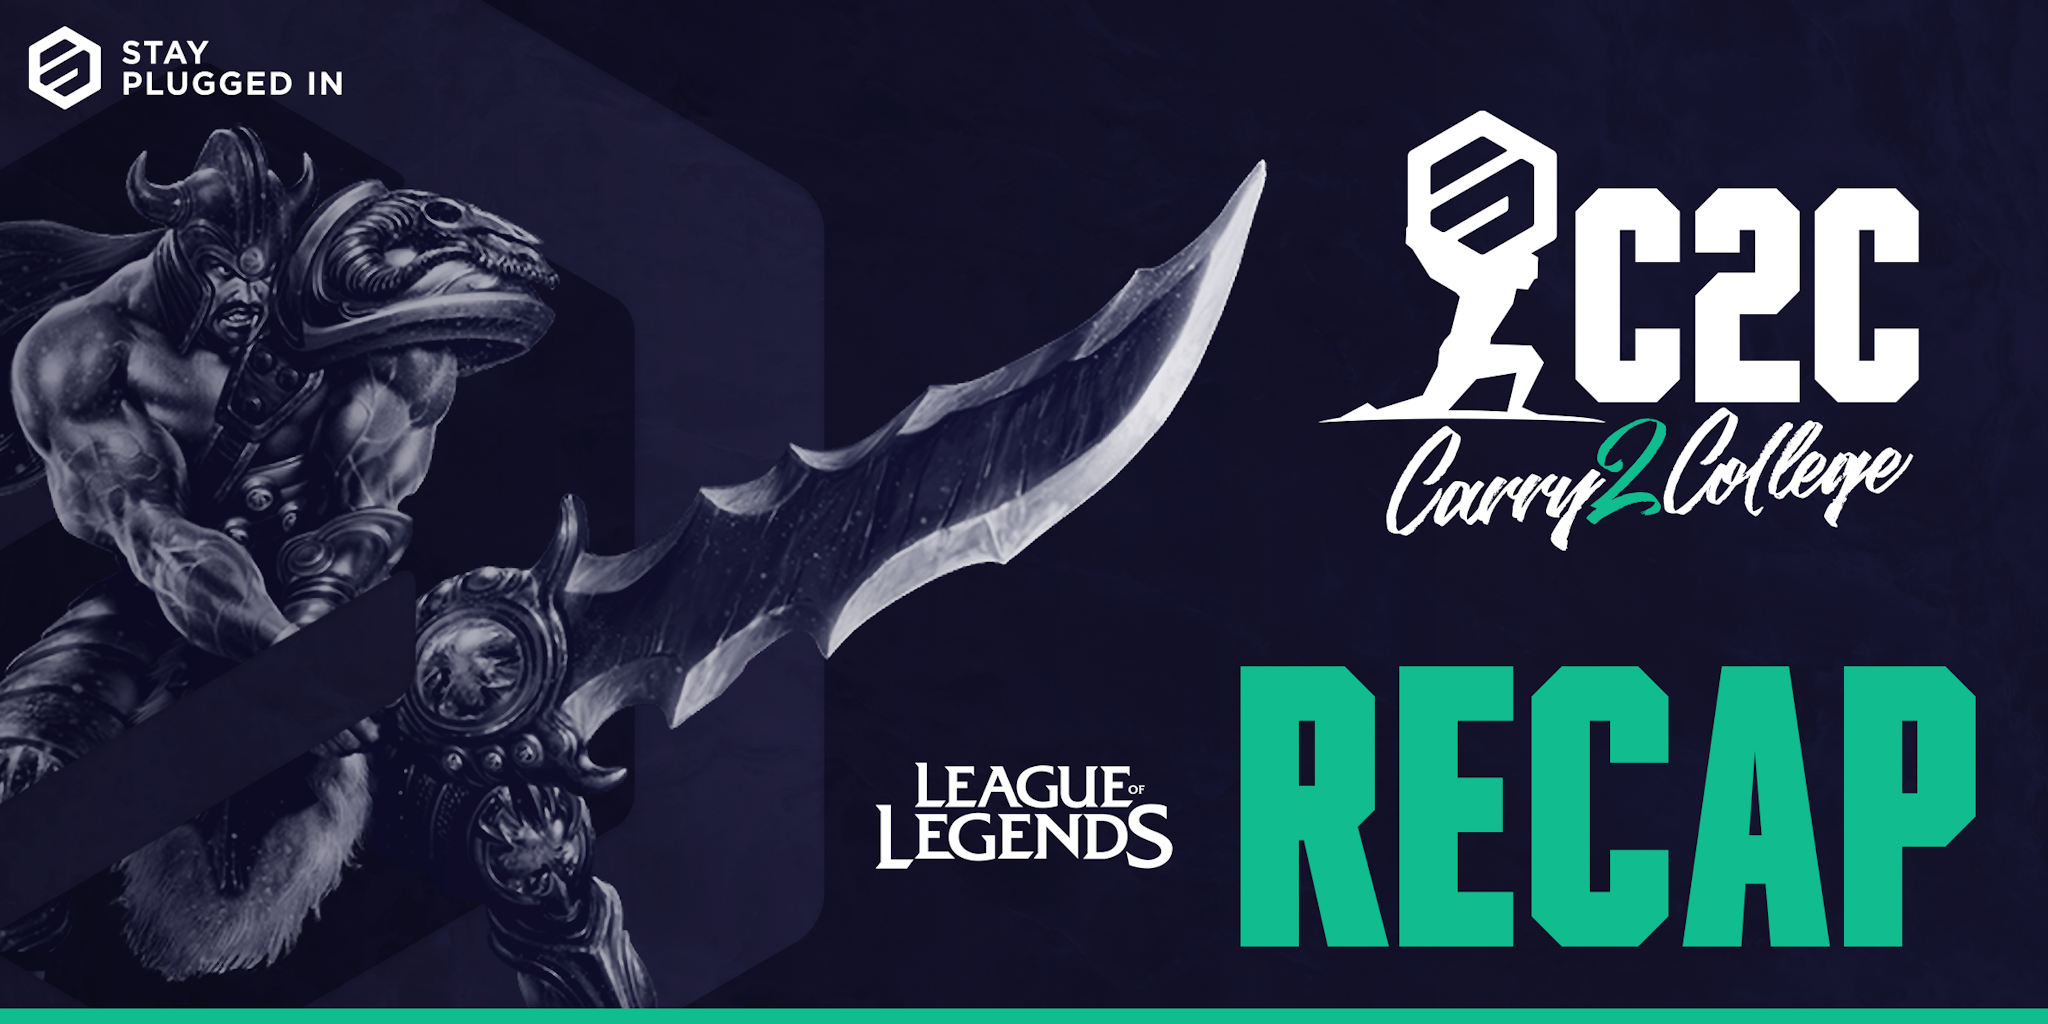 Carry 2 College Summer | League of Legends Recap